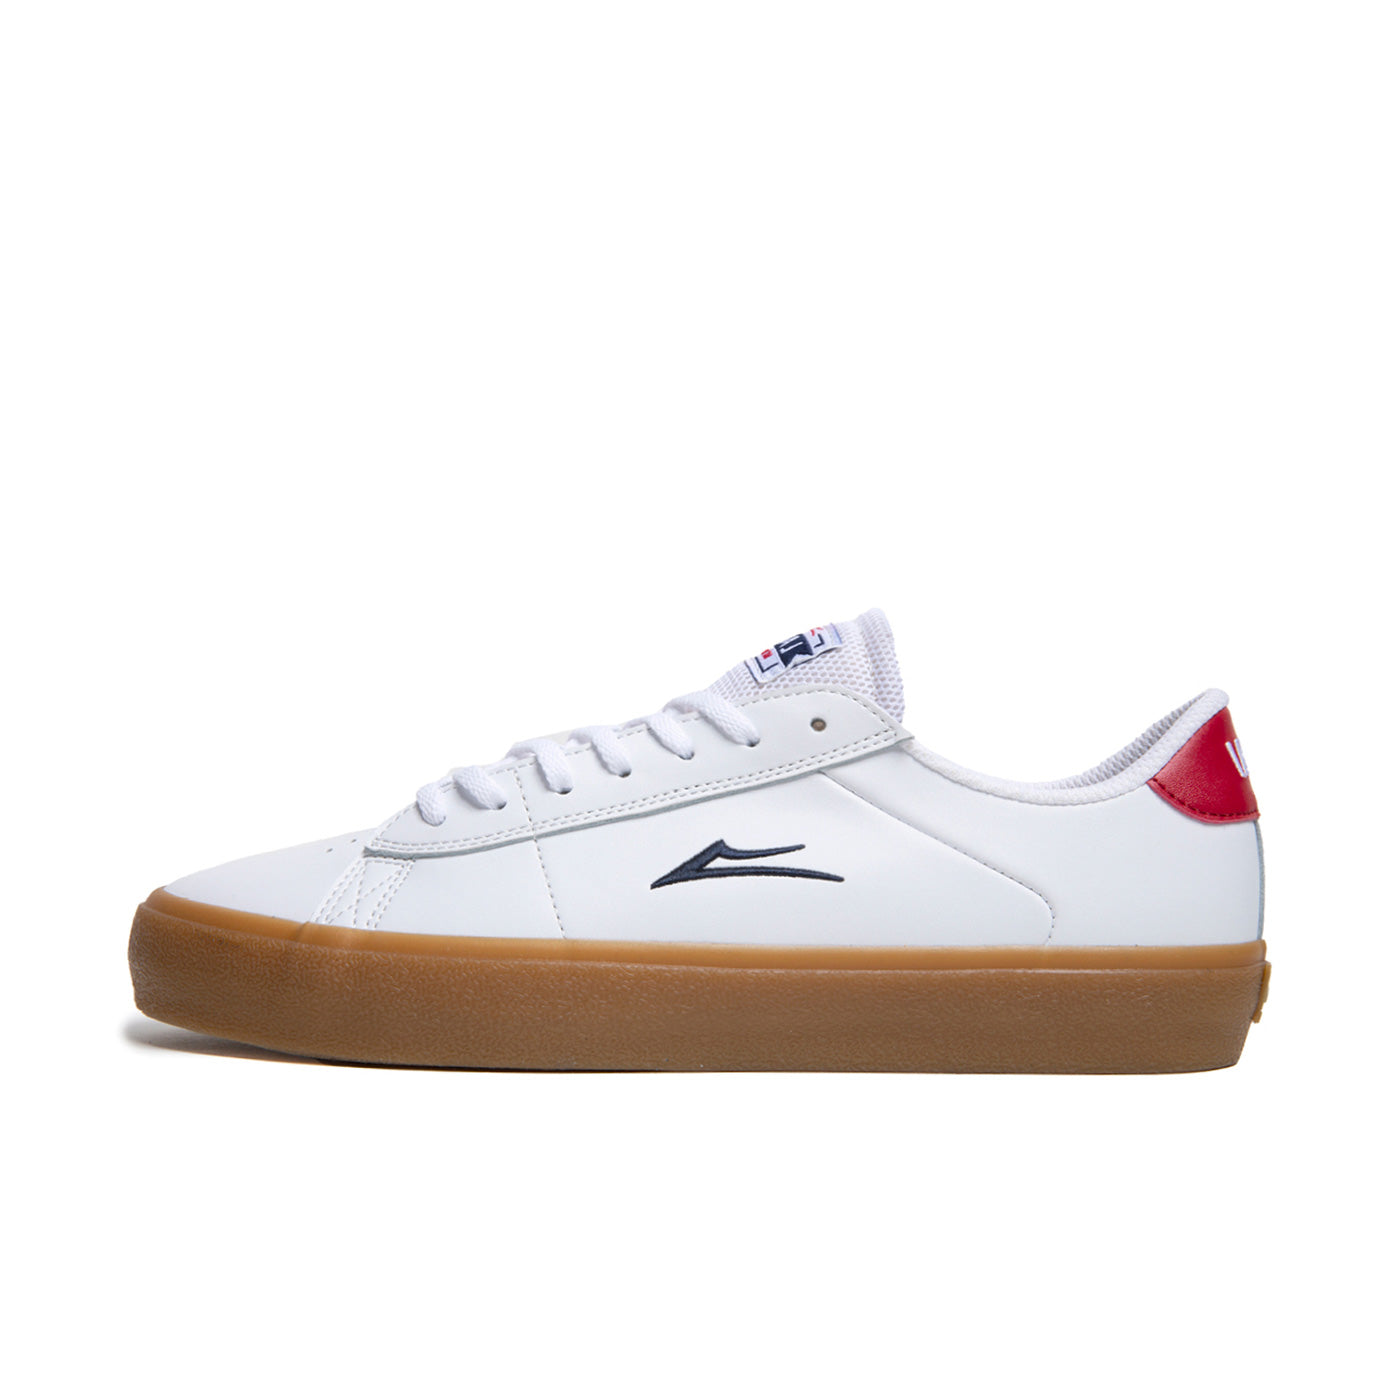 Lakai Newport Leather Shoes - White/Gum